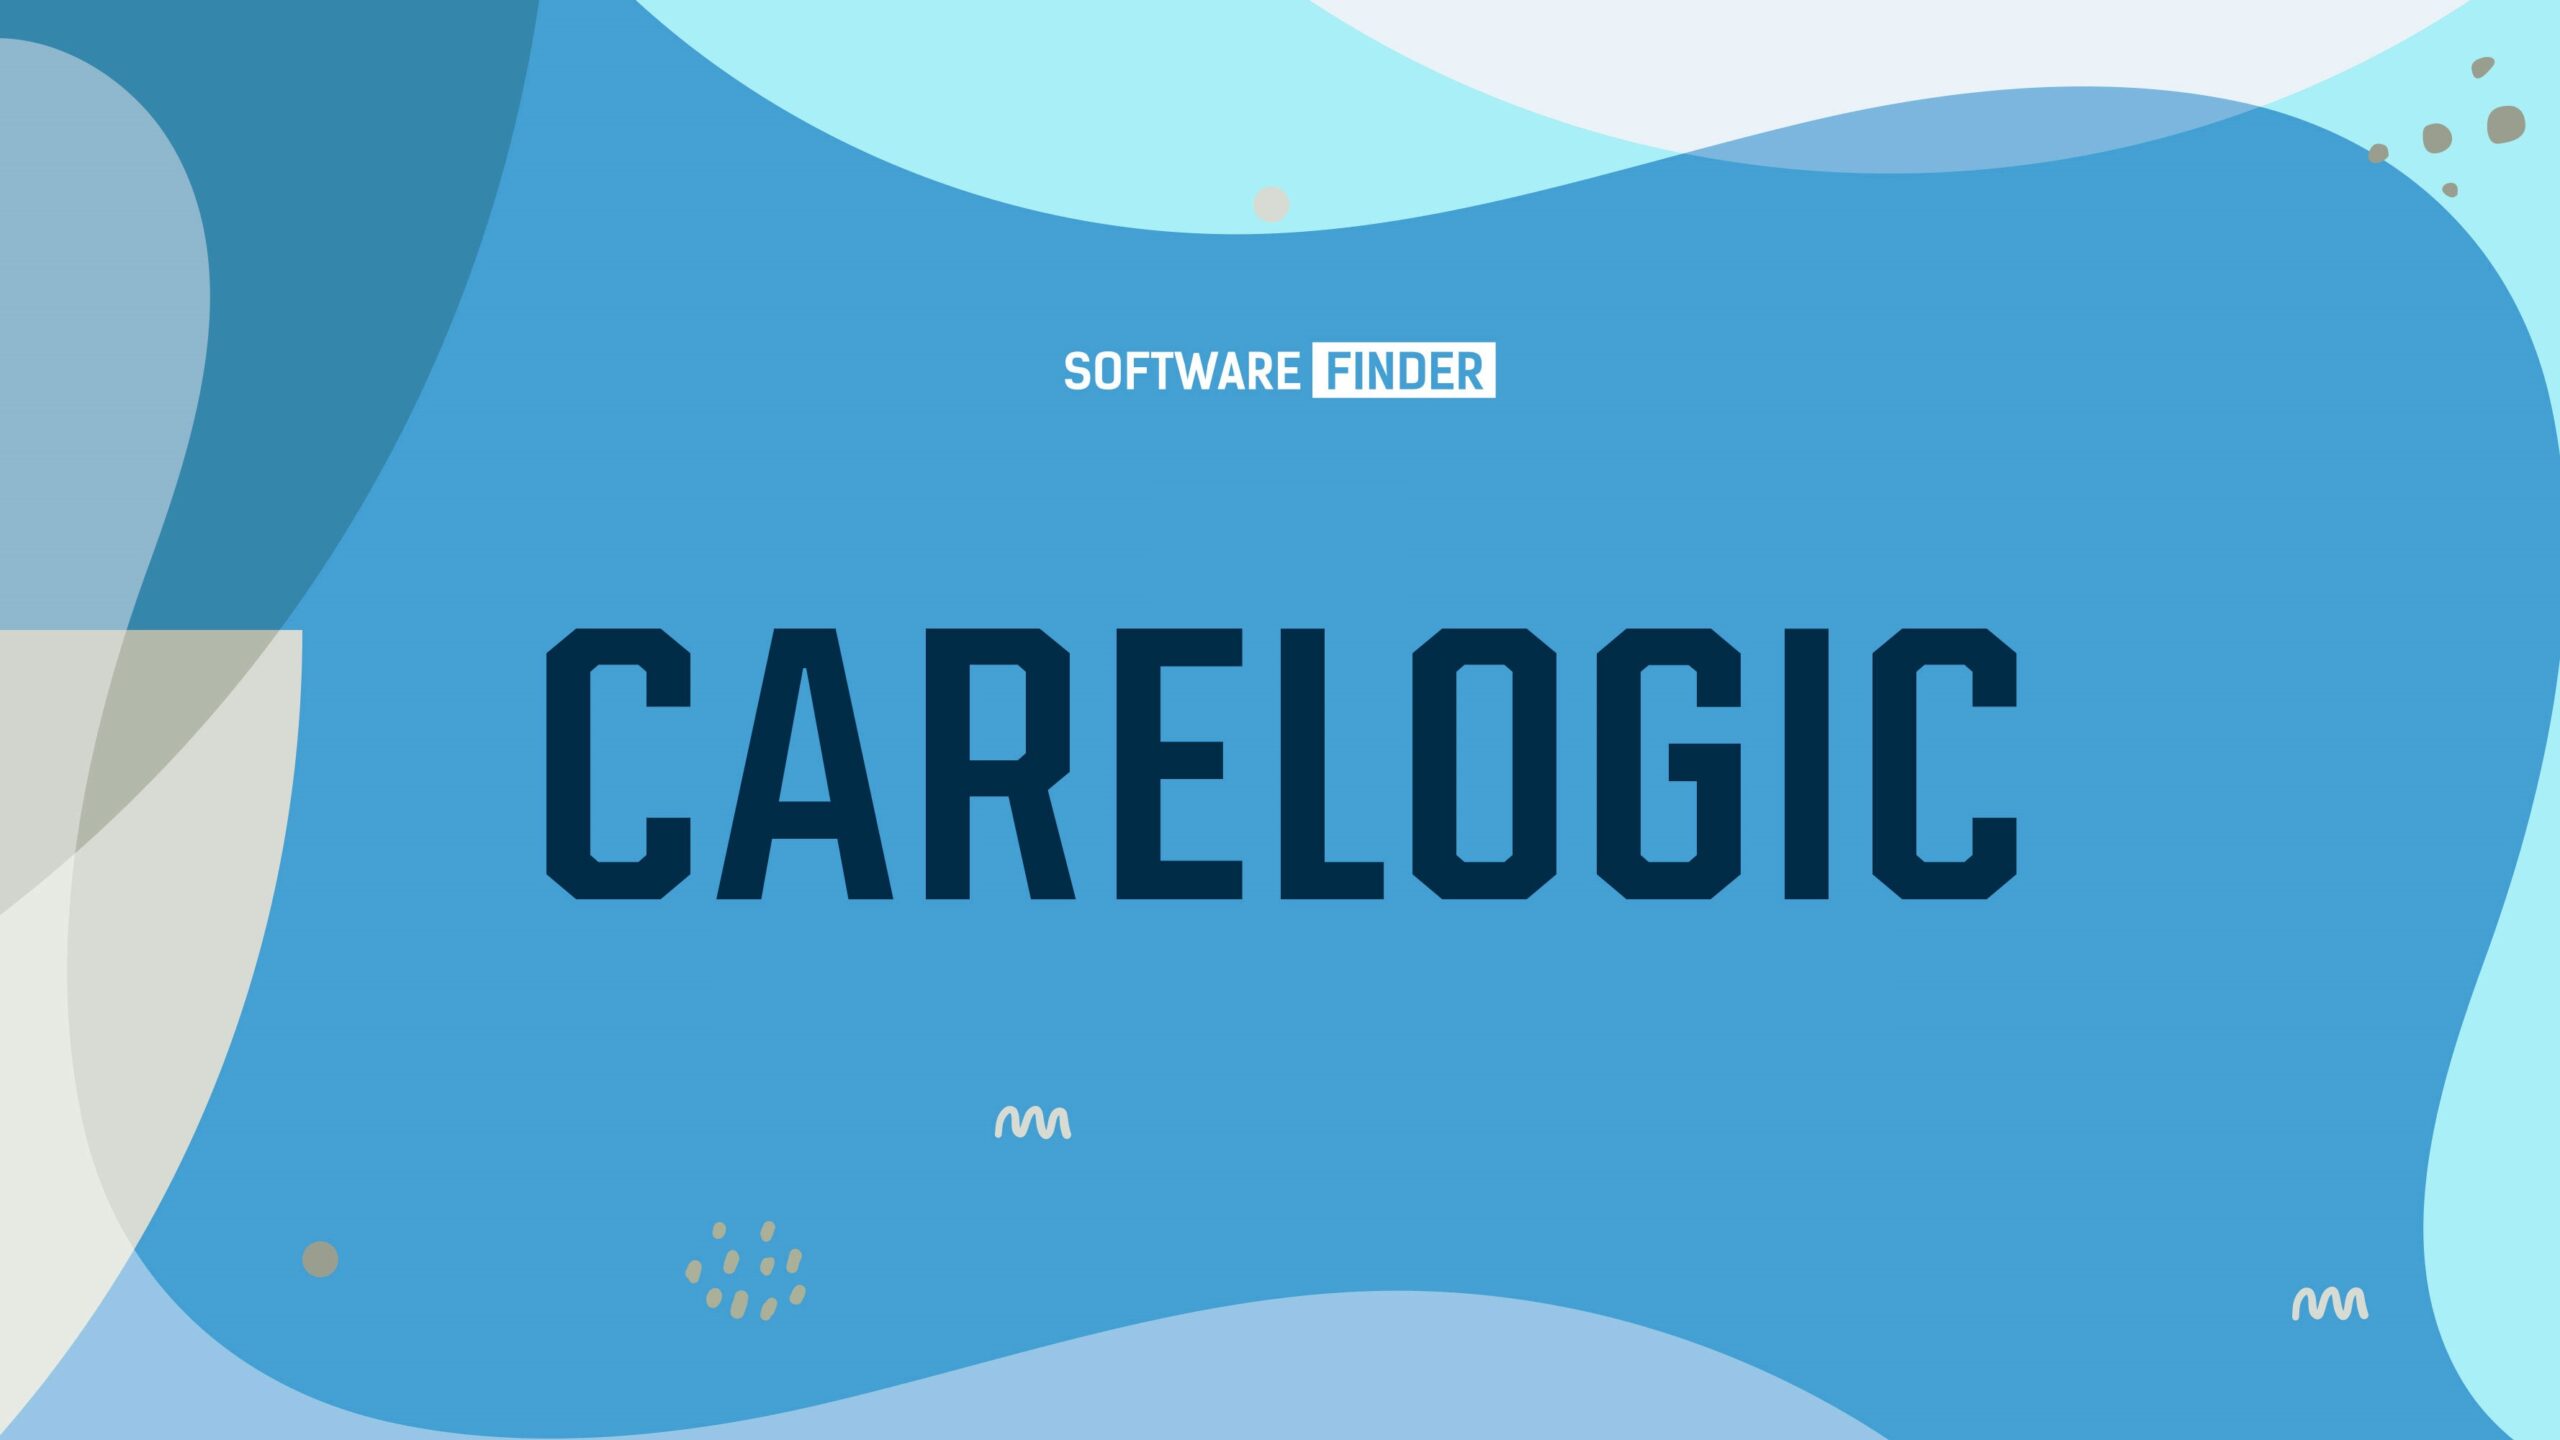 Carelogic Enterprises